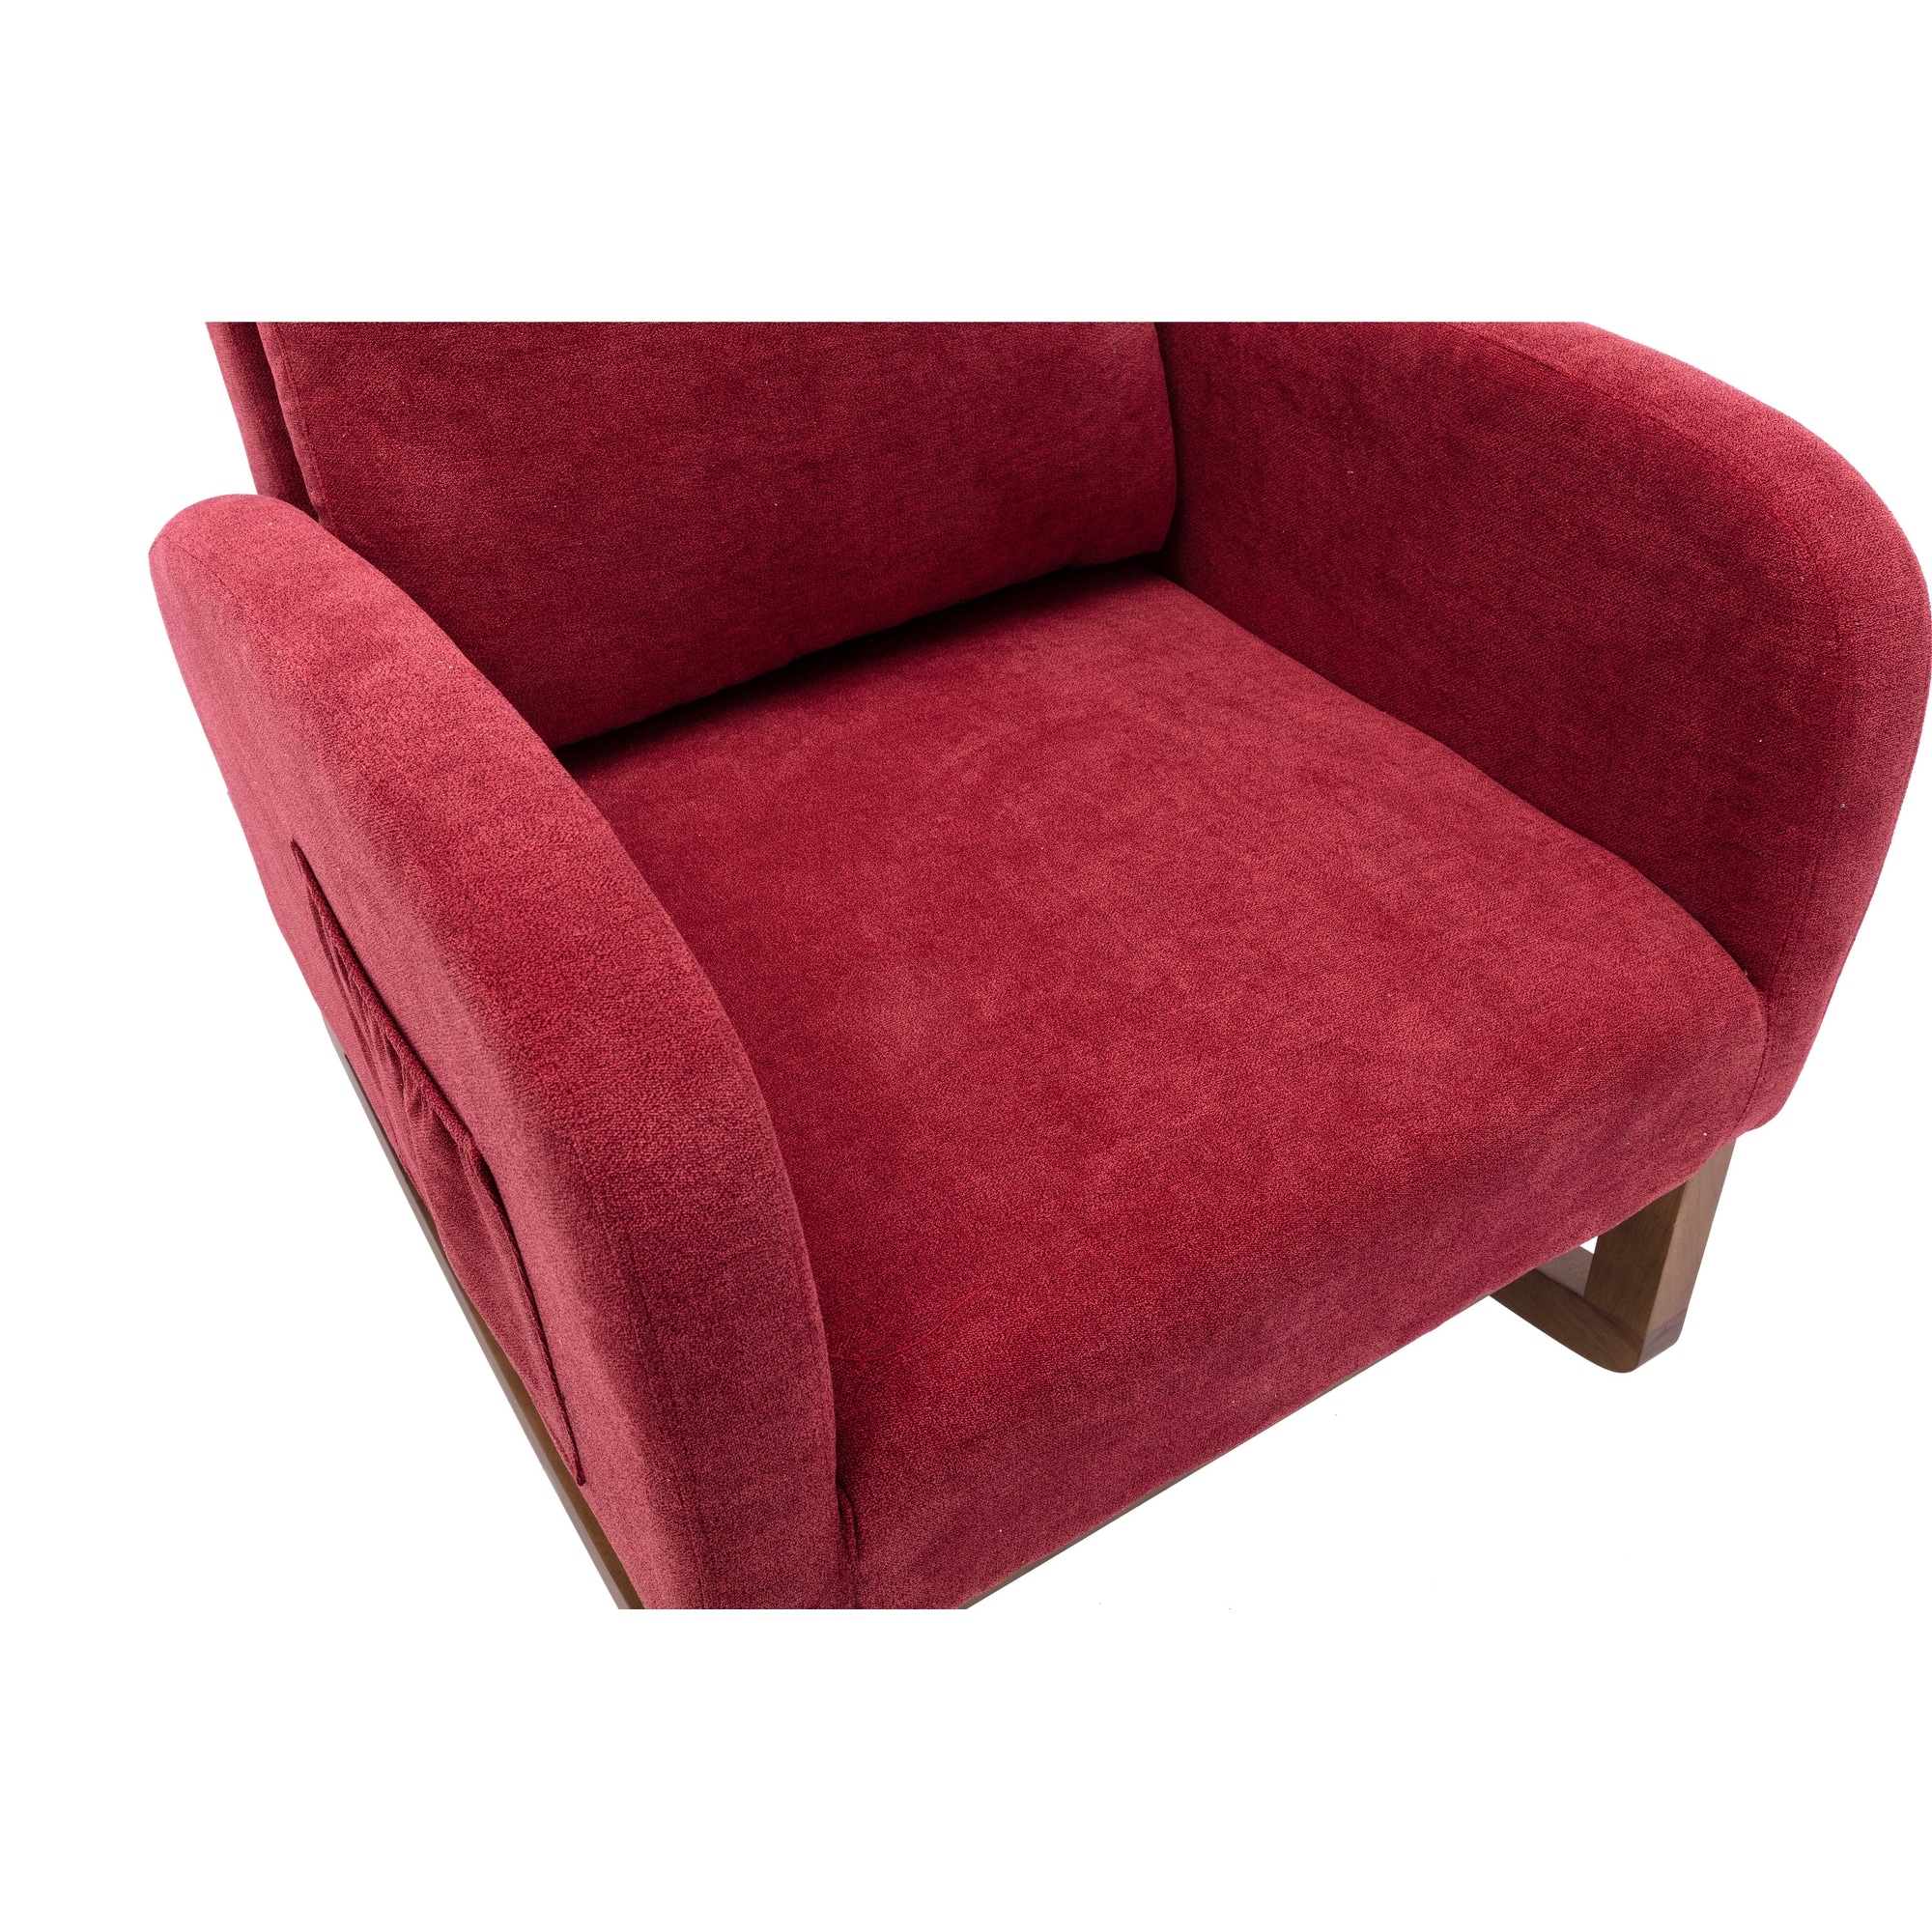 Comfortable High Back Rocking Chair, Ergonomic Arm, Living Room Chair